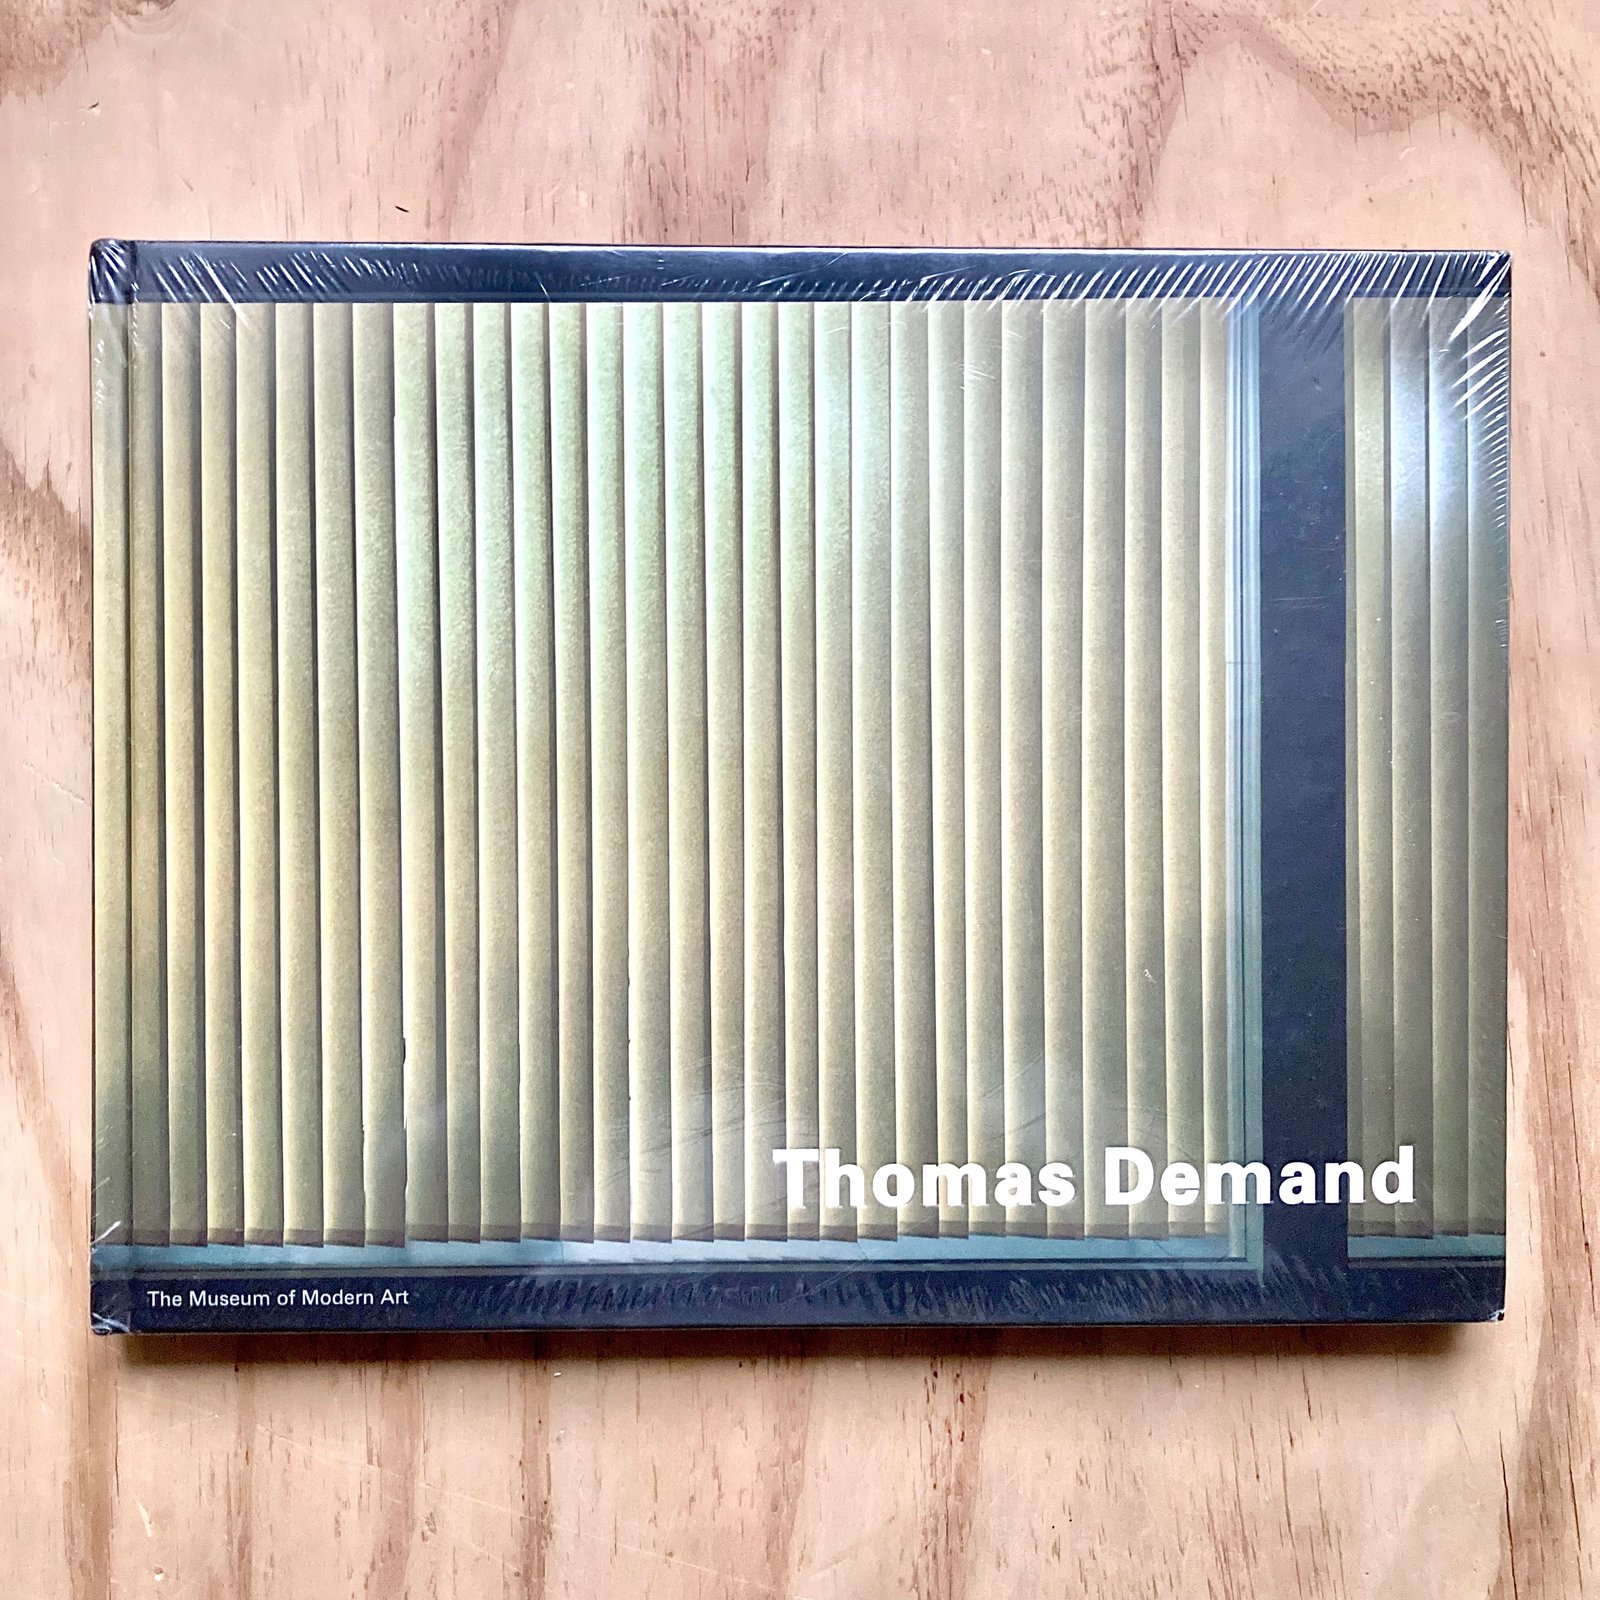 Thomas Demand by Roxana Marcoci (MOMA) | Photobook Junkies